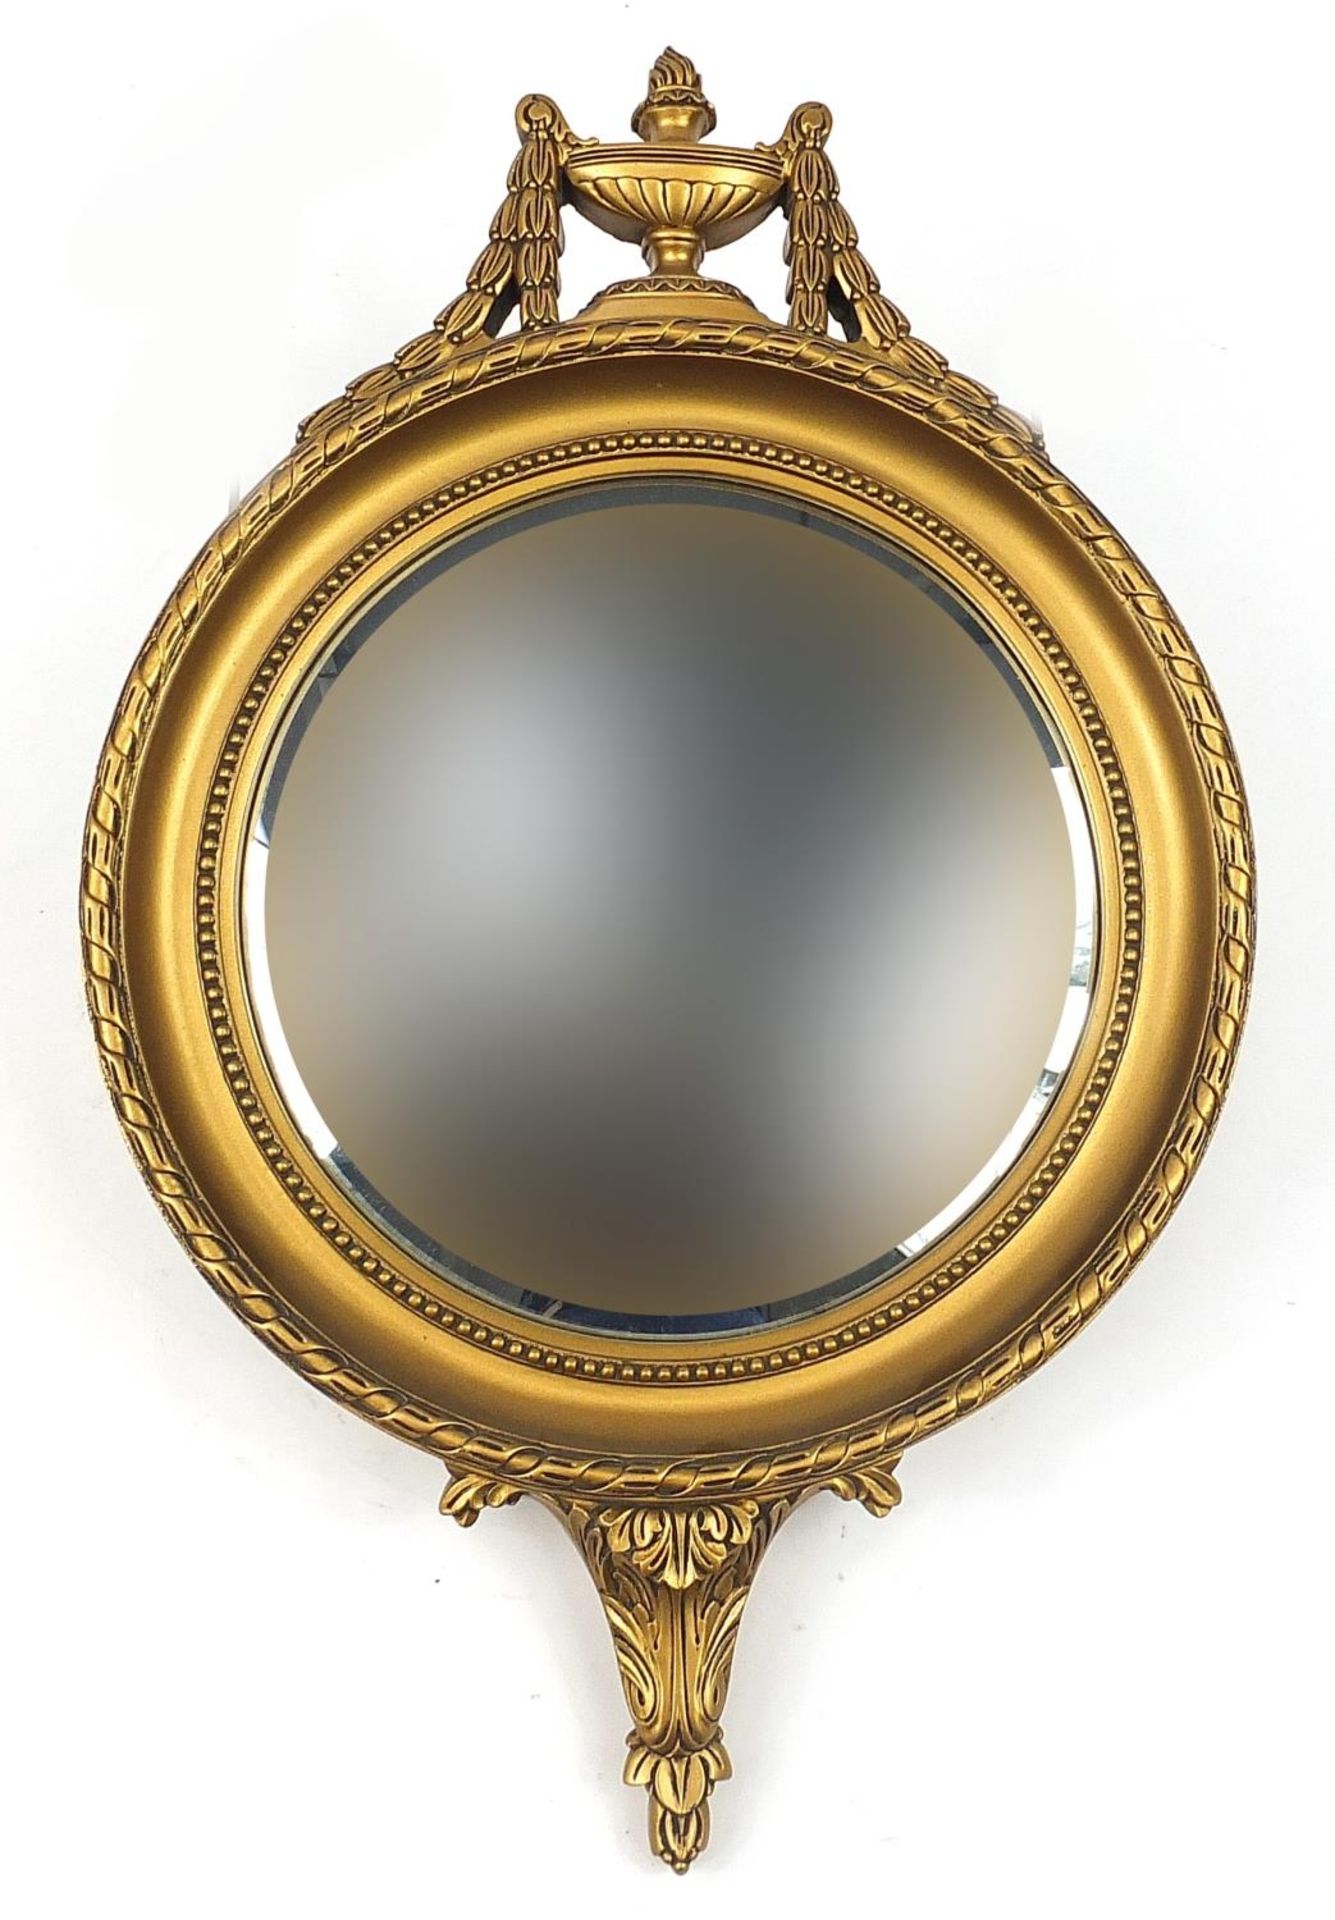 Ornate gilt framed convex mirror with urn, 65.5cm high